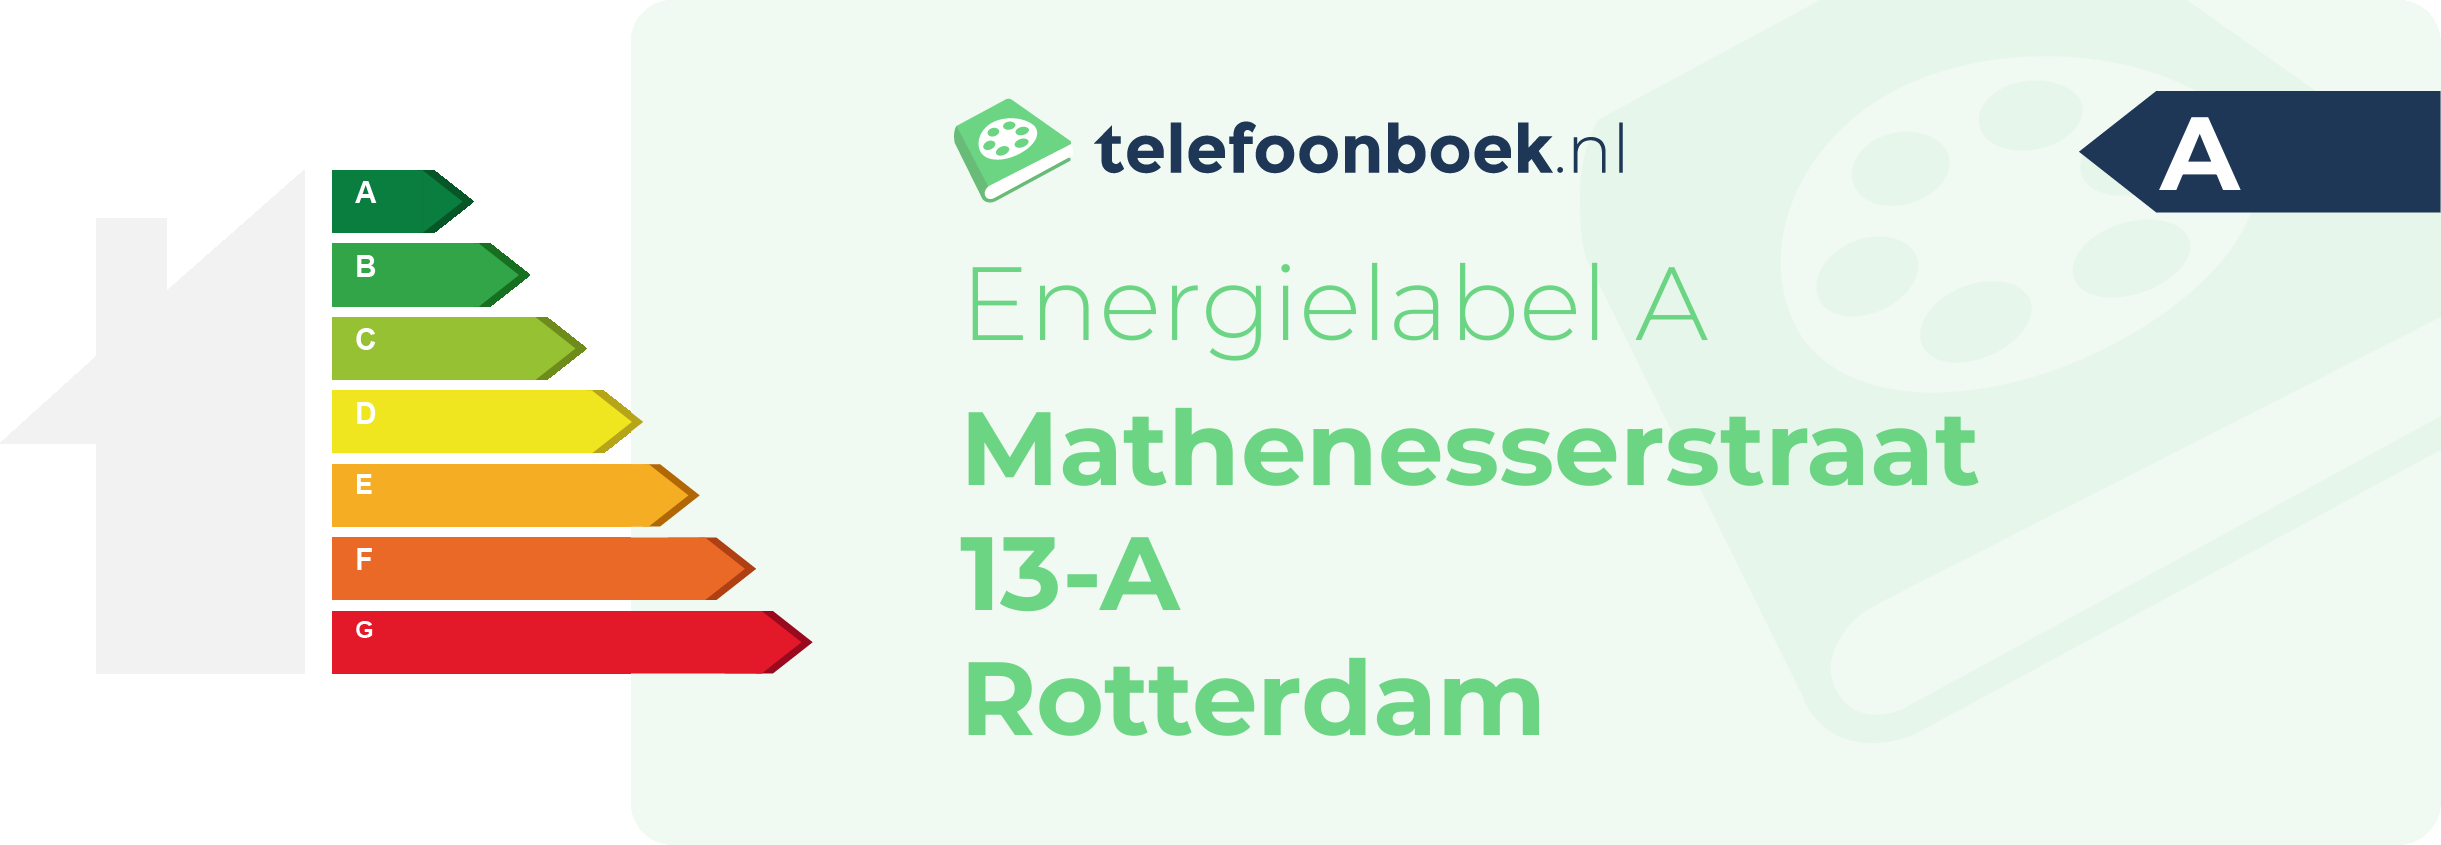 Energielabel Mathenesserstraat 13-A Rotterdam